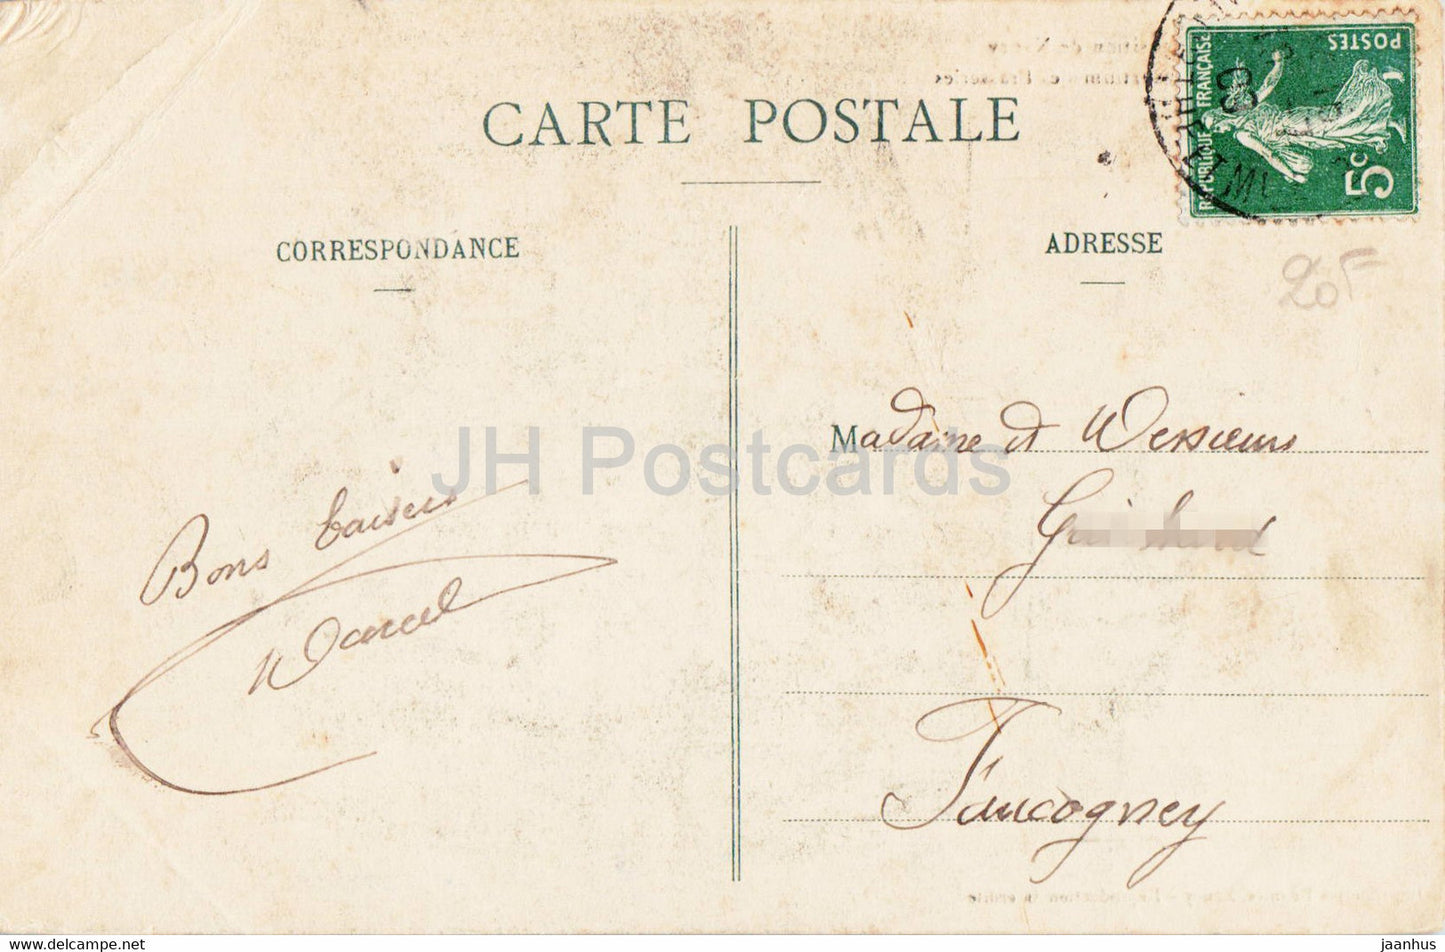 Exposition de Nancy - Consortium des Brasseries - 8 - old postcard - 1909 - France - used